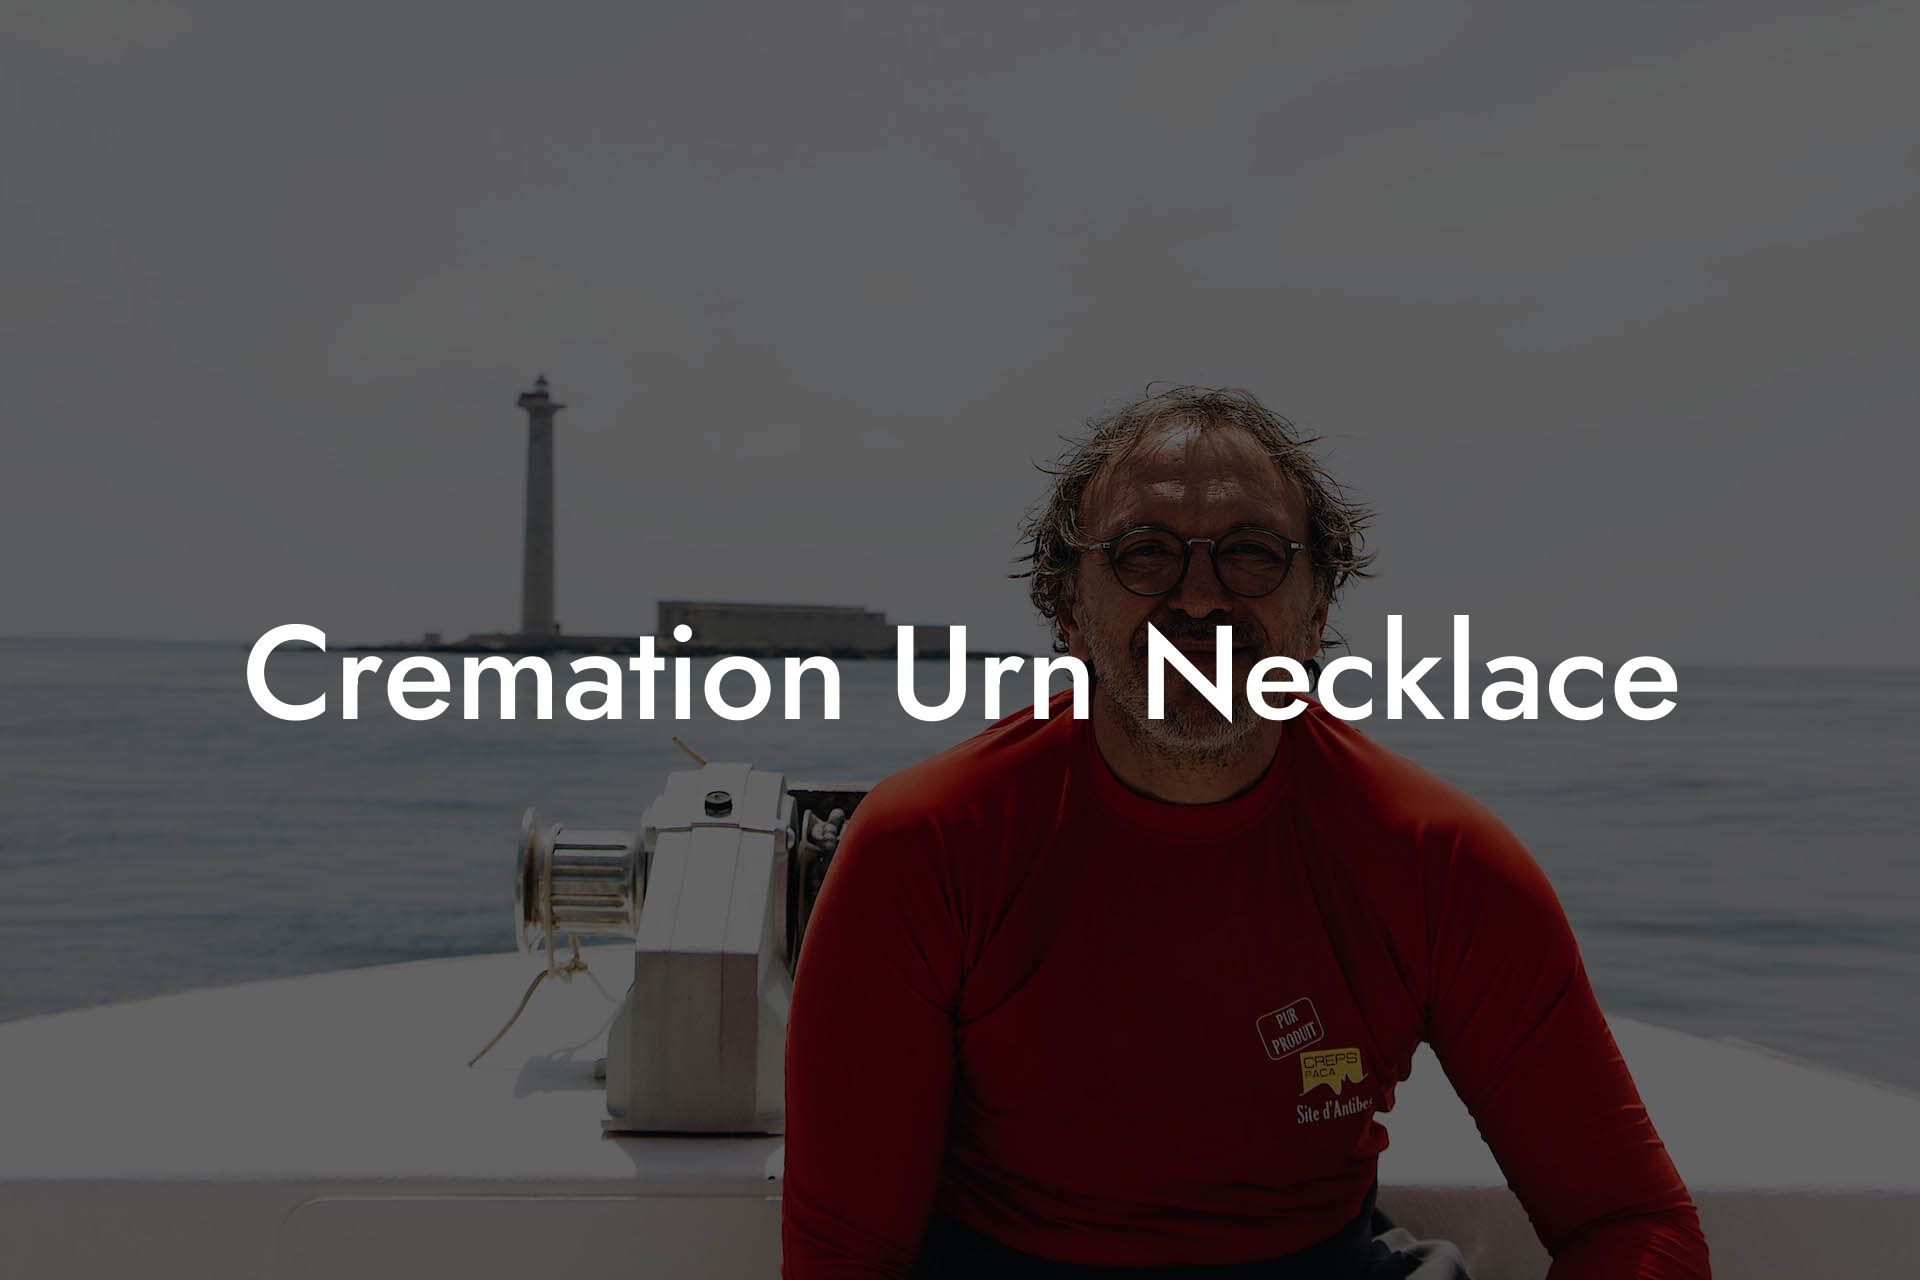 Cremation Urn Necklace